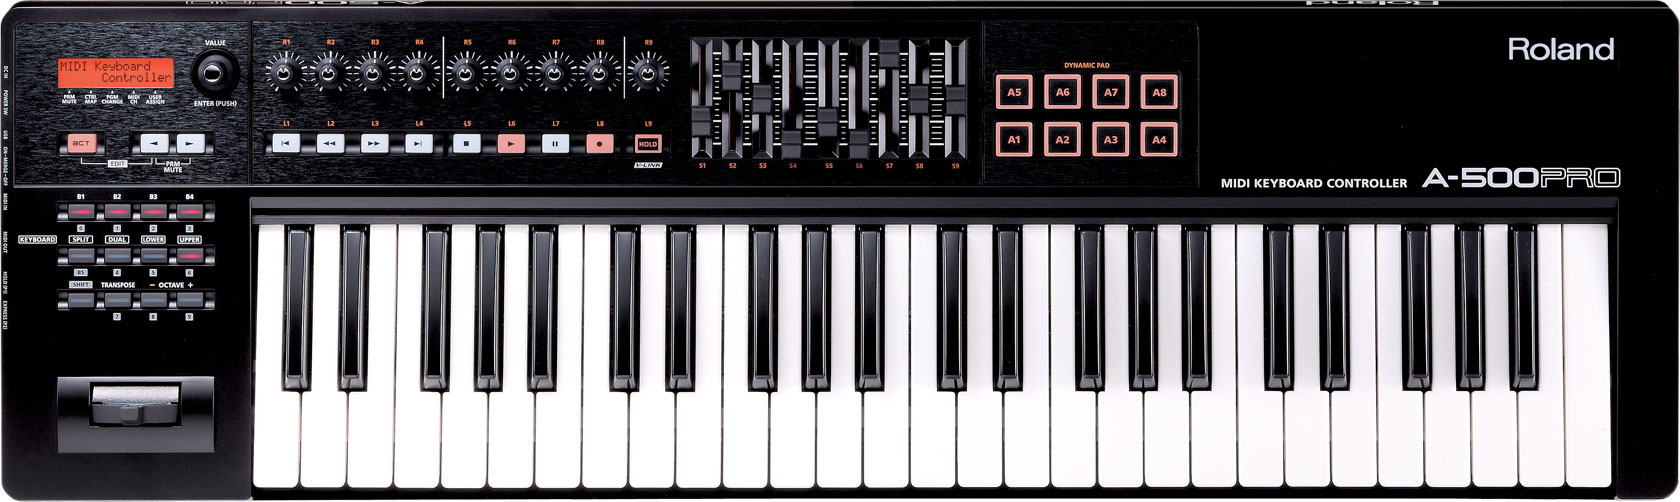 A-500PRO | MIDI Keyboard Controller - Roland